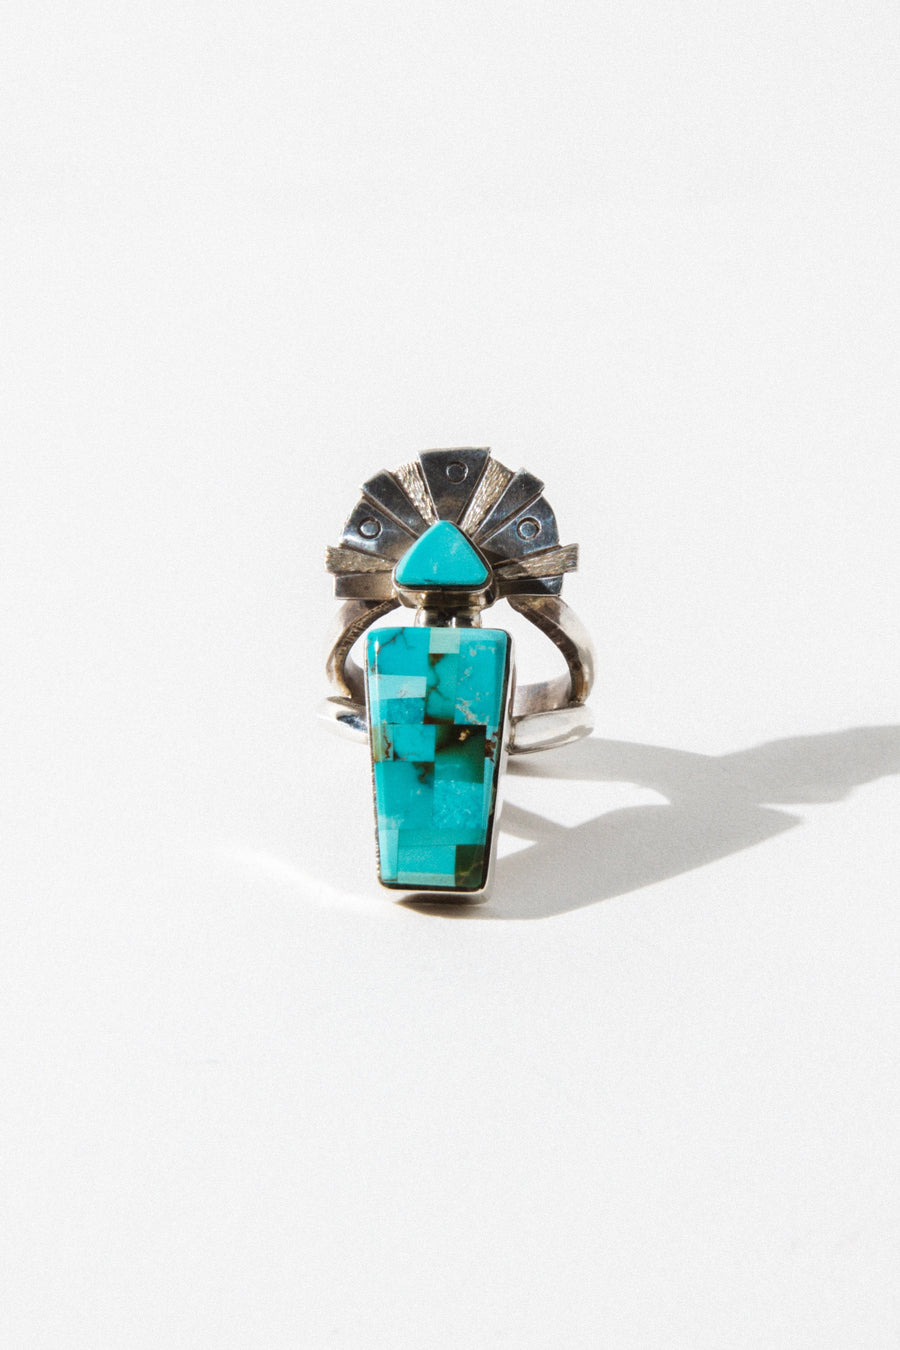 Zuni Kachina Doll Turquoise Ring